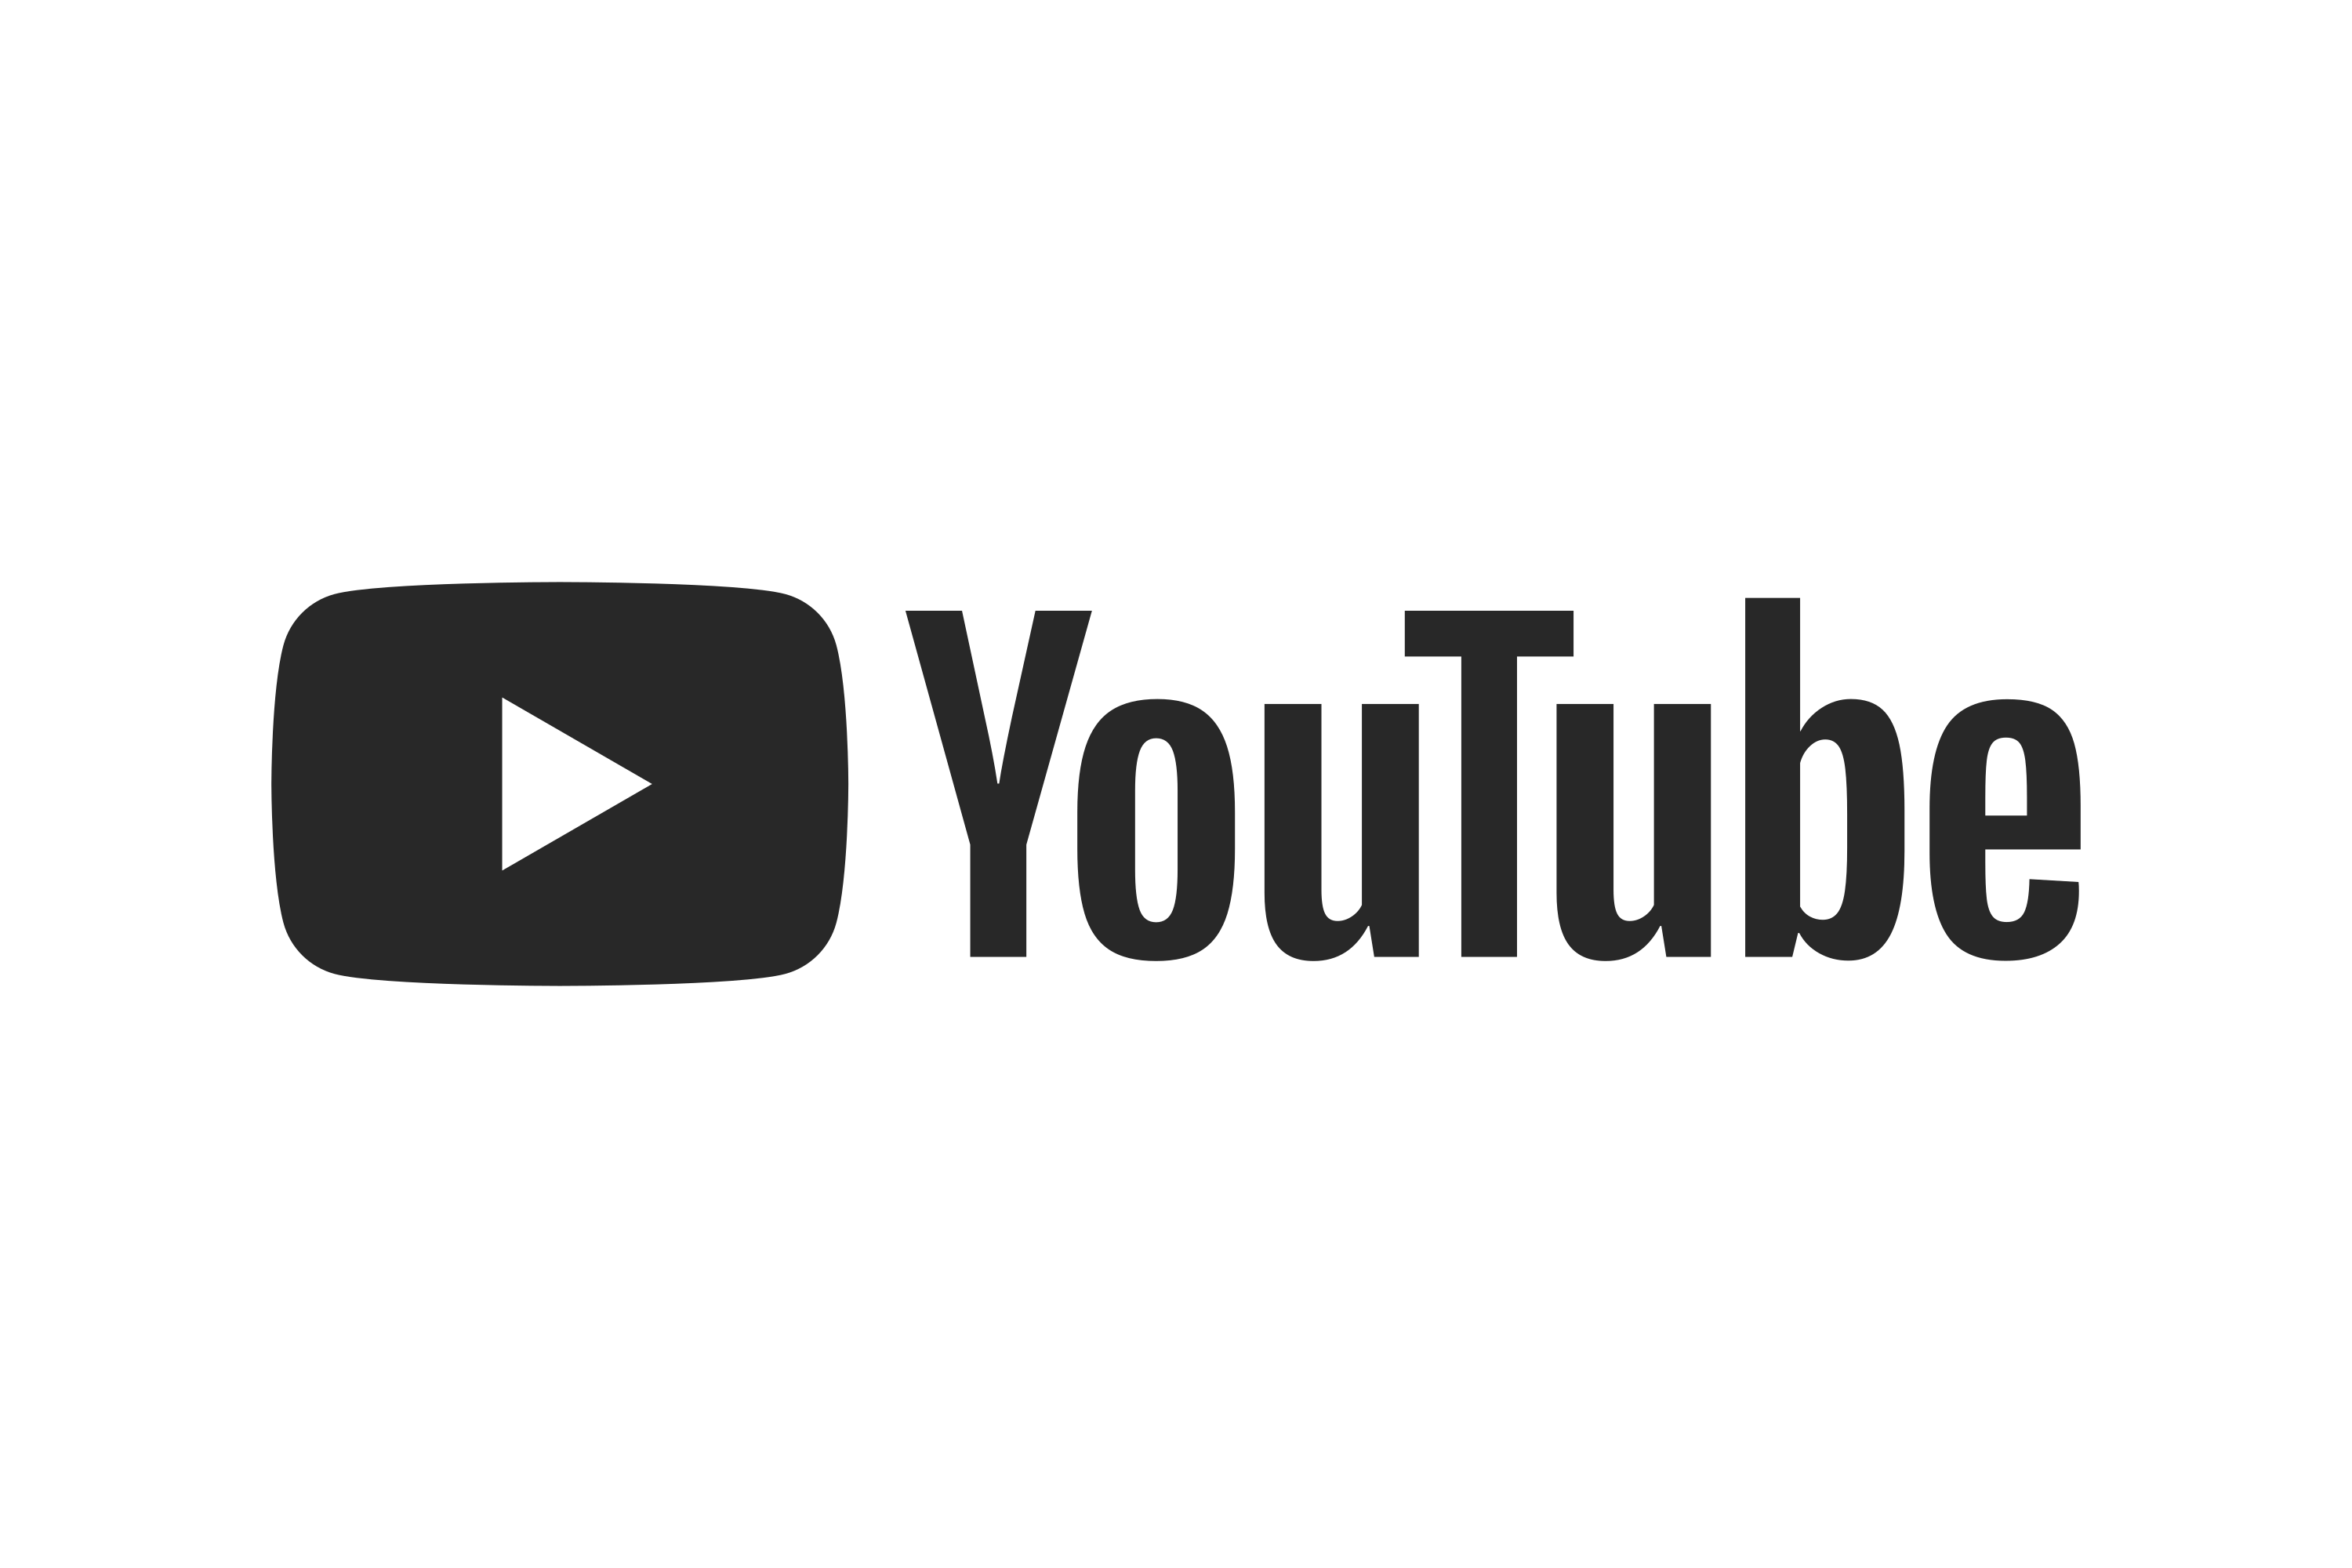 YouTube-logo2